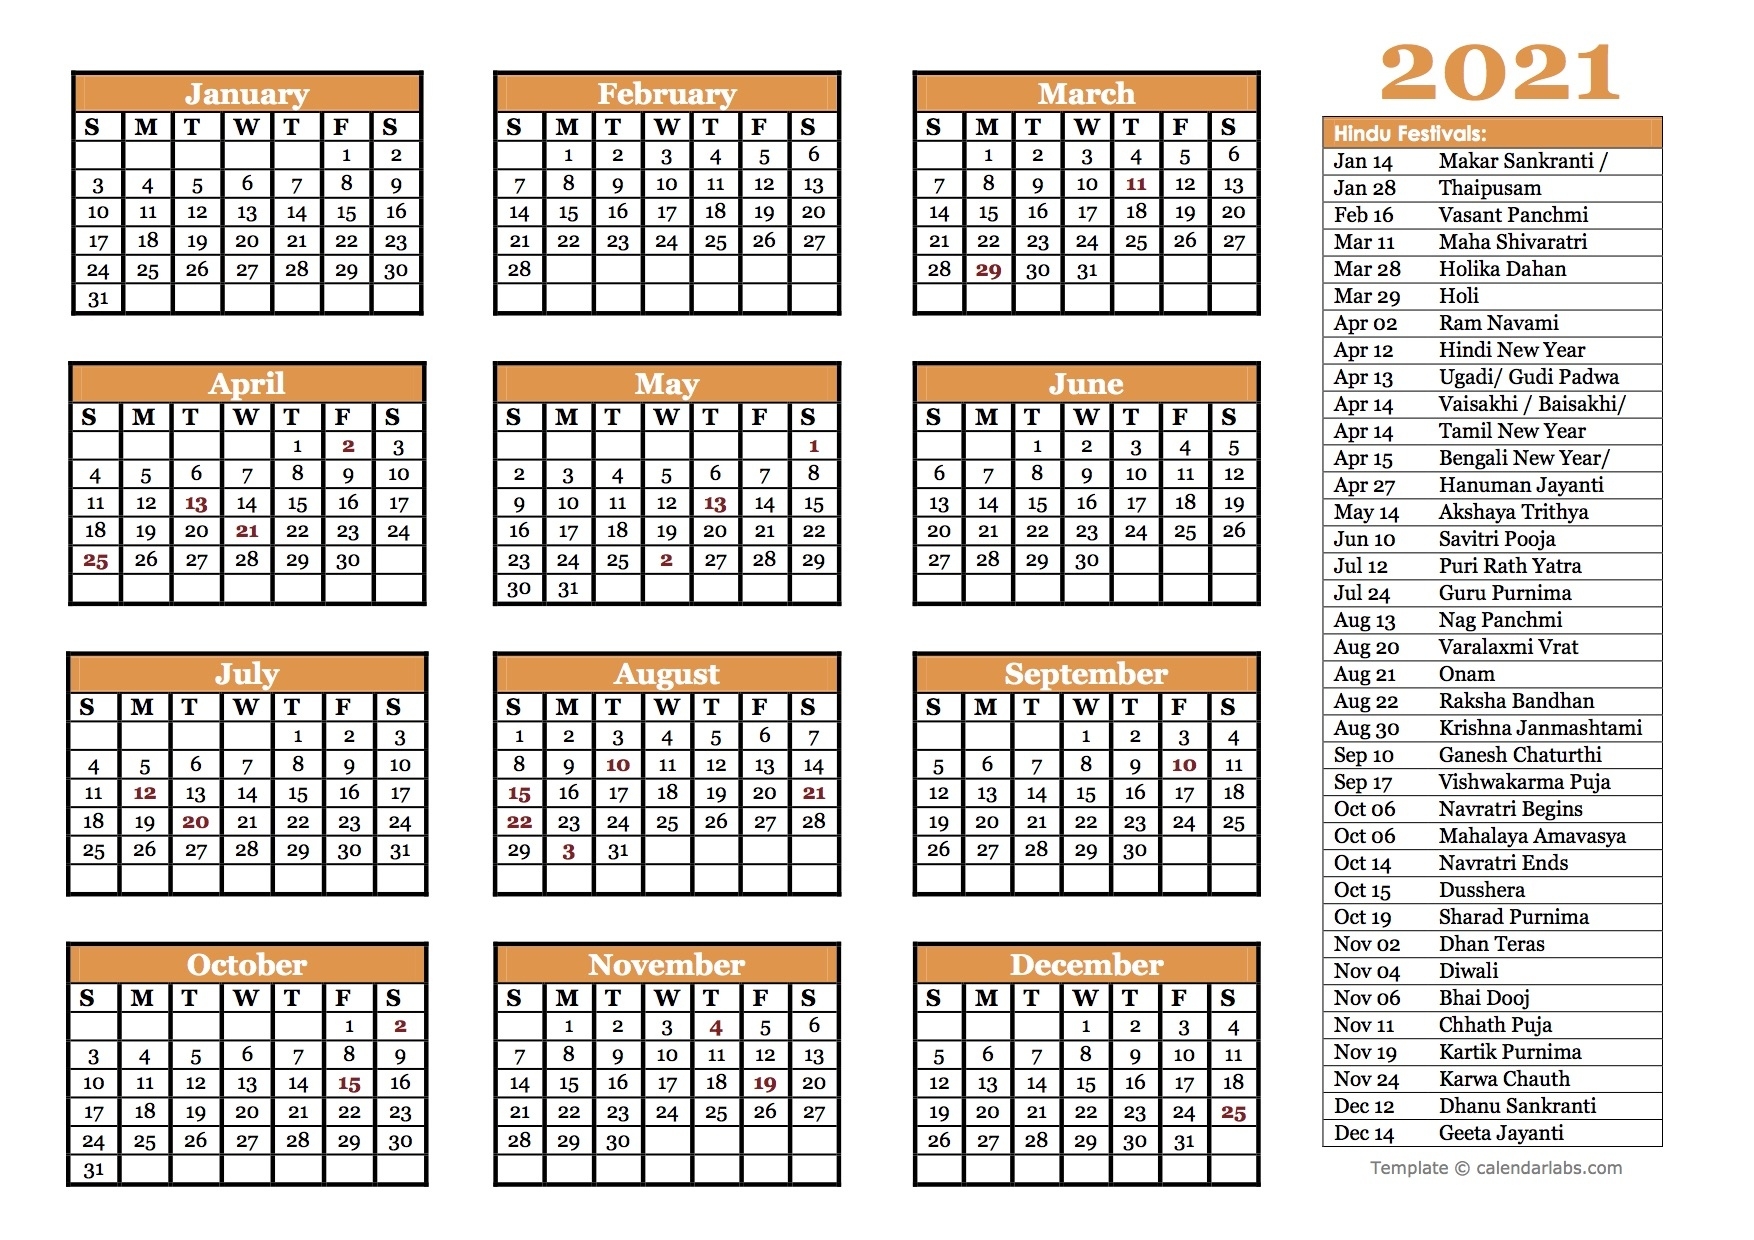 2021 Hindu Festivals Calendar Template - Free Printable Templates June 2021 Calendar Hindi